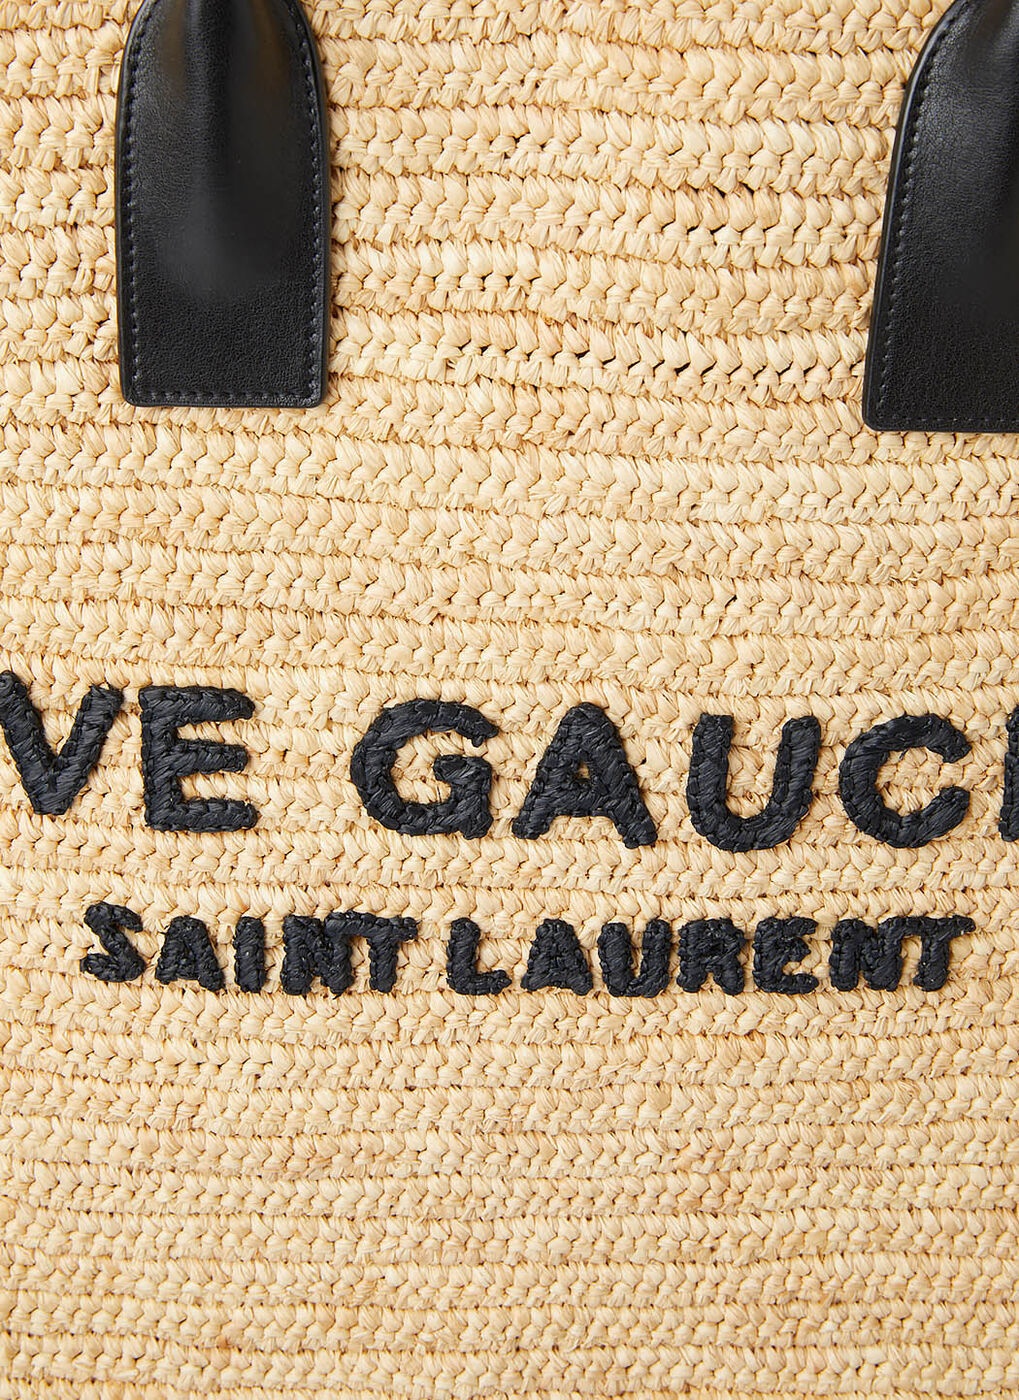 Saint Laurent Rive Gauche Printed Beige Raffia Tote Bag New